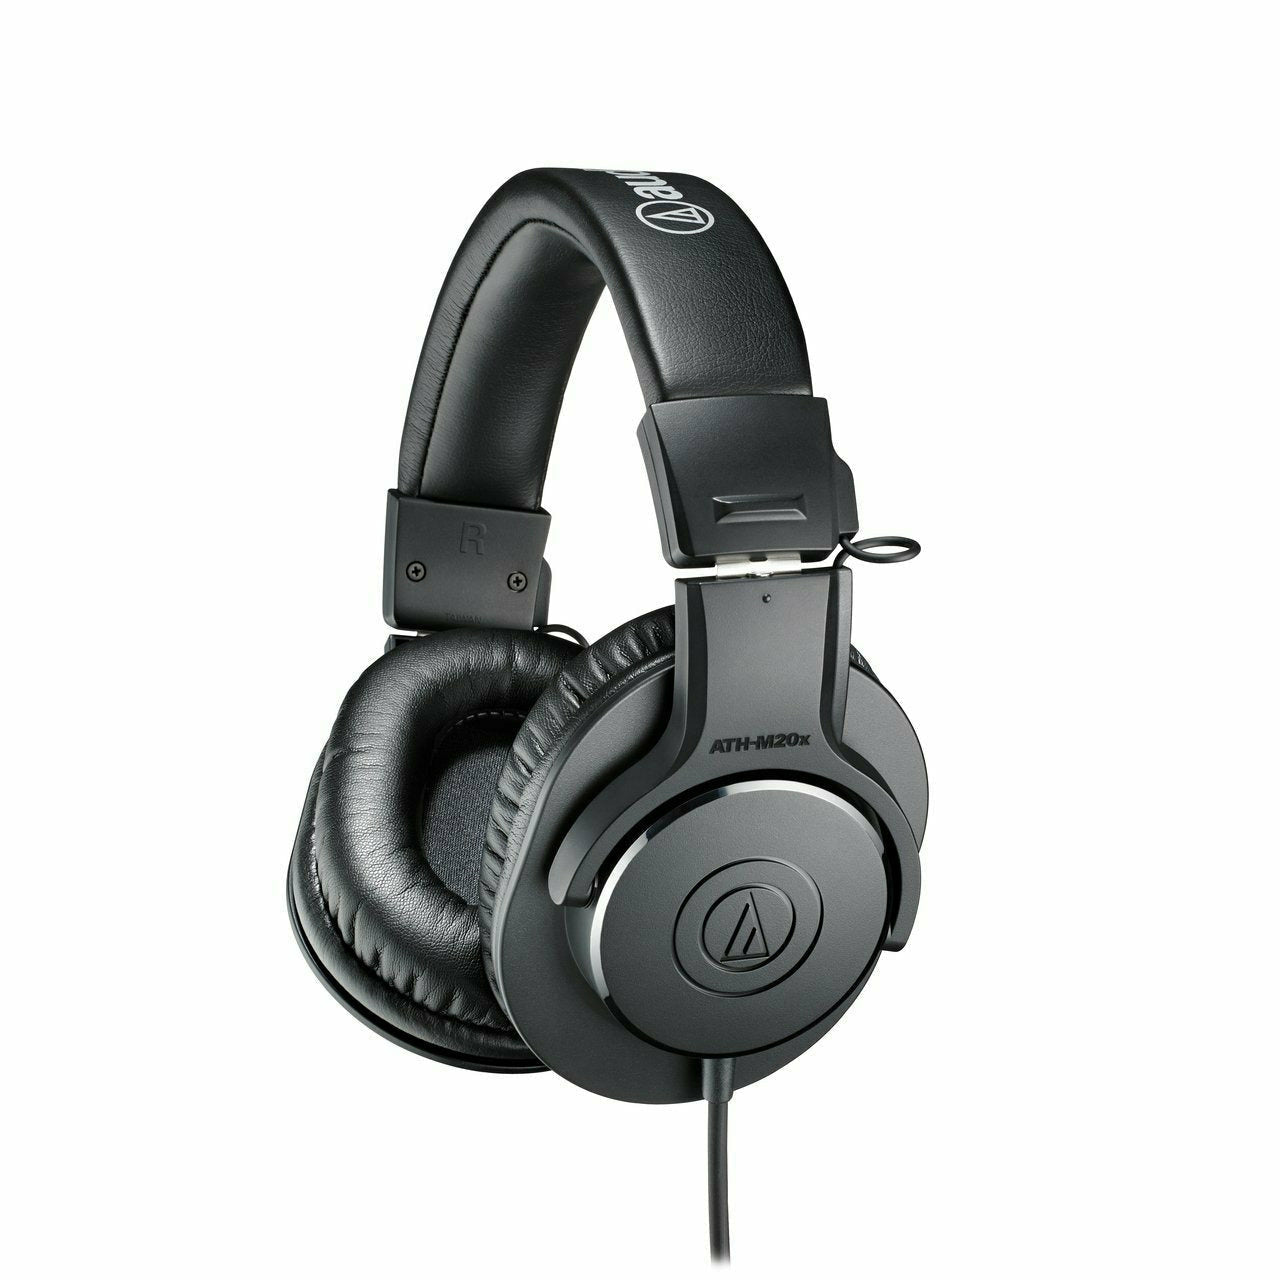 Audio-Technica ATH-M20x Monitor Headphones (Black) - Dragon Image